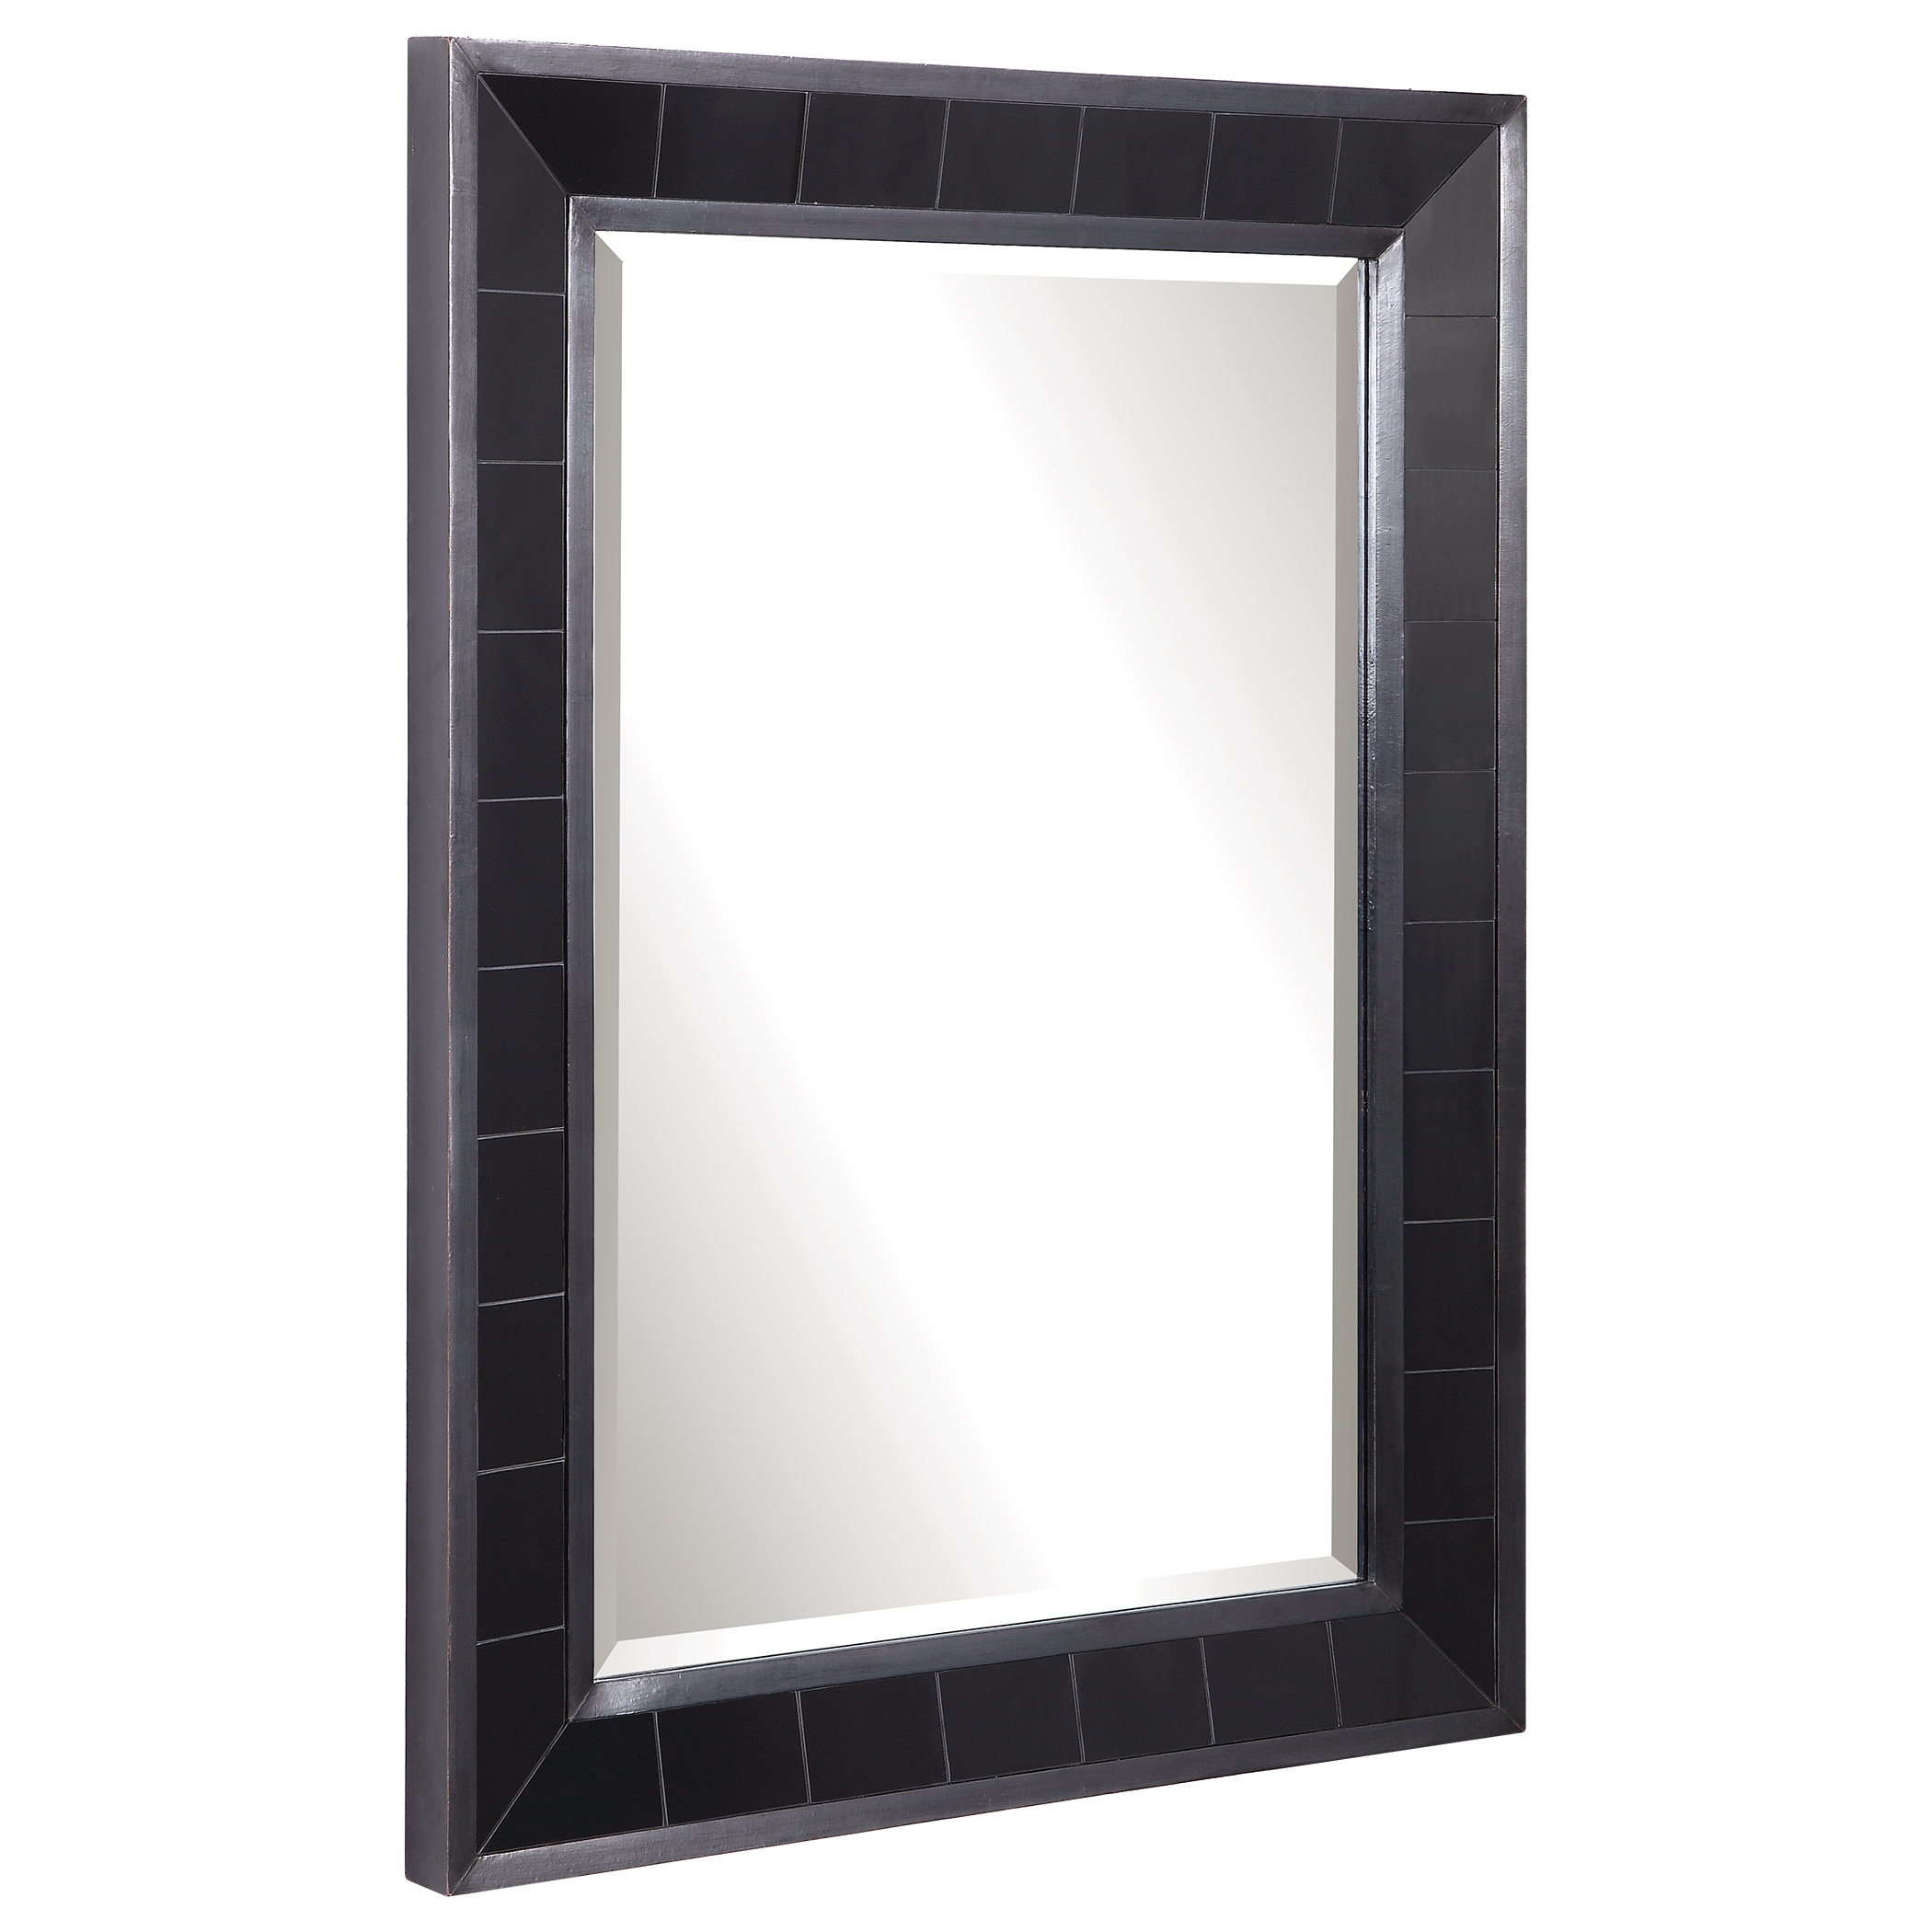 Lonara Black Tile Mirror - Image 3